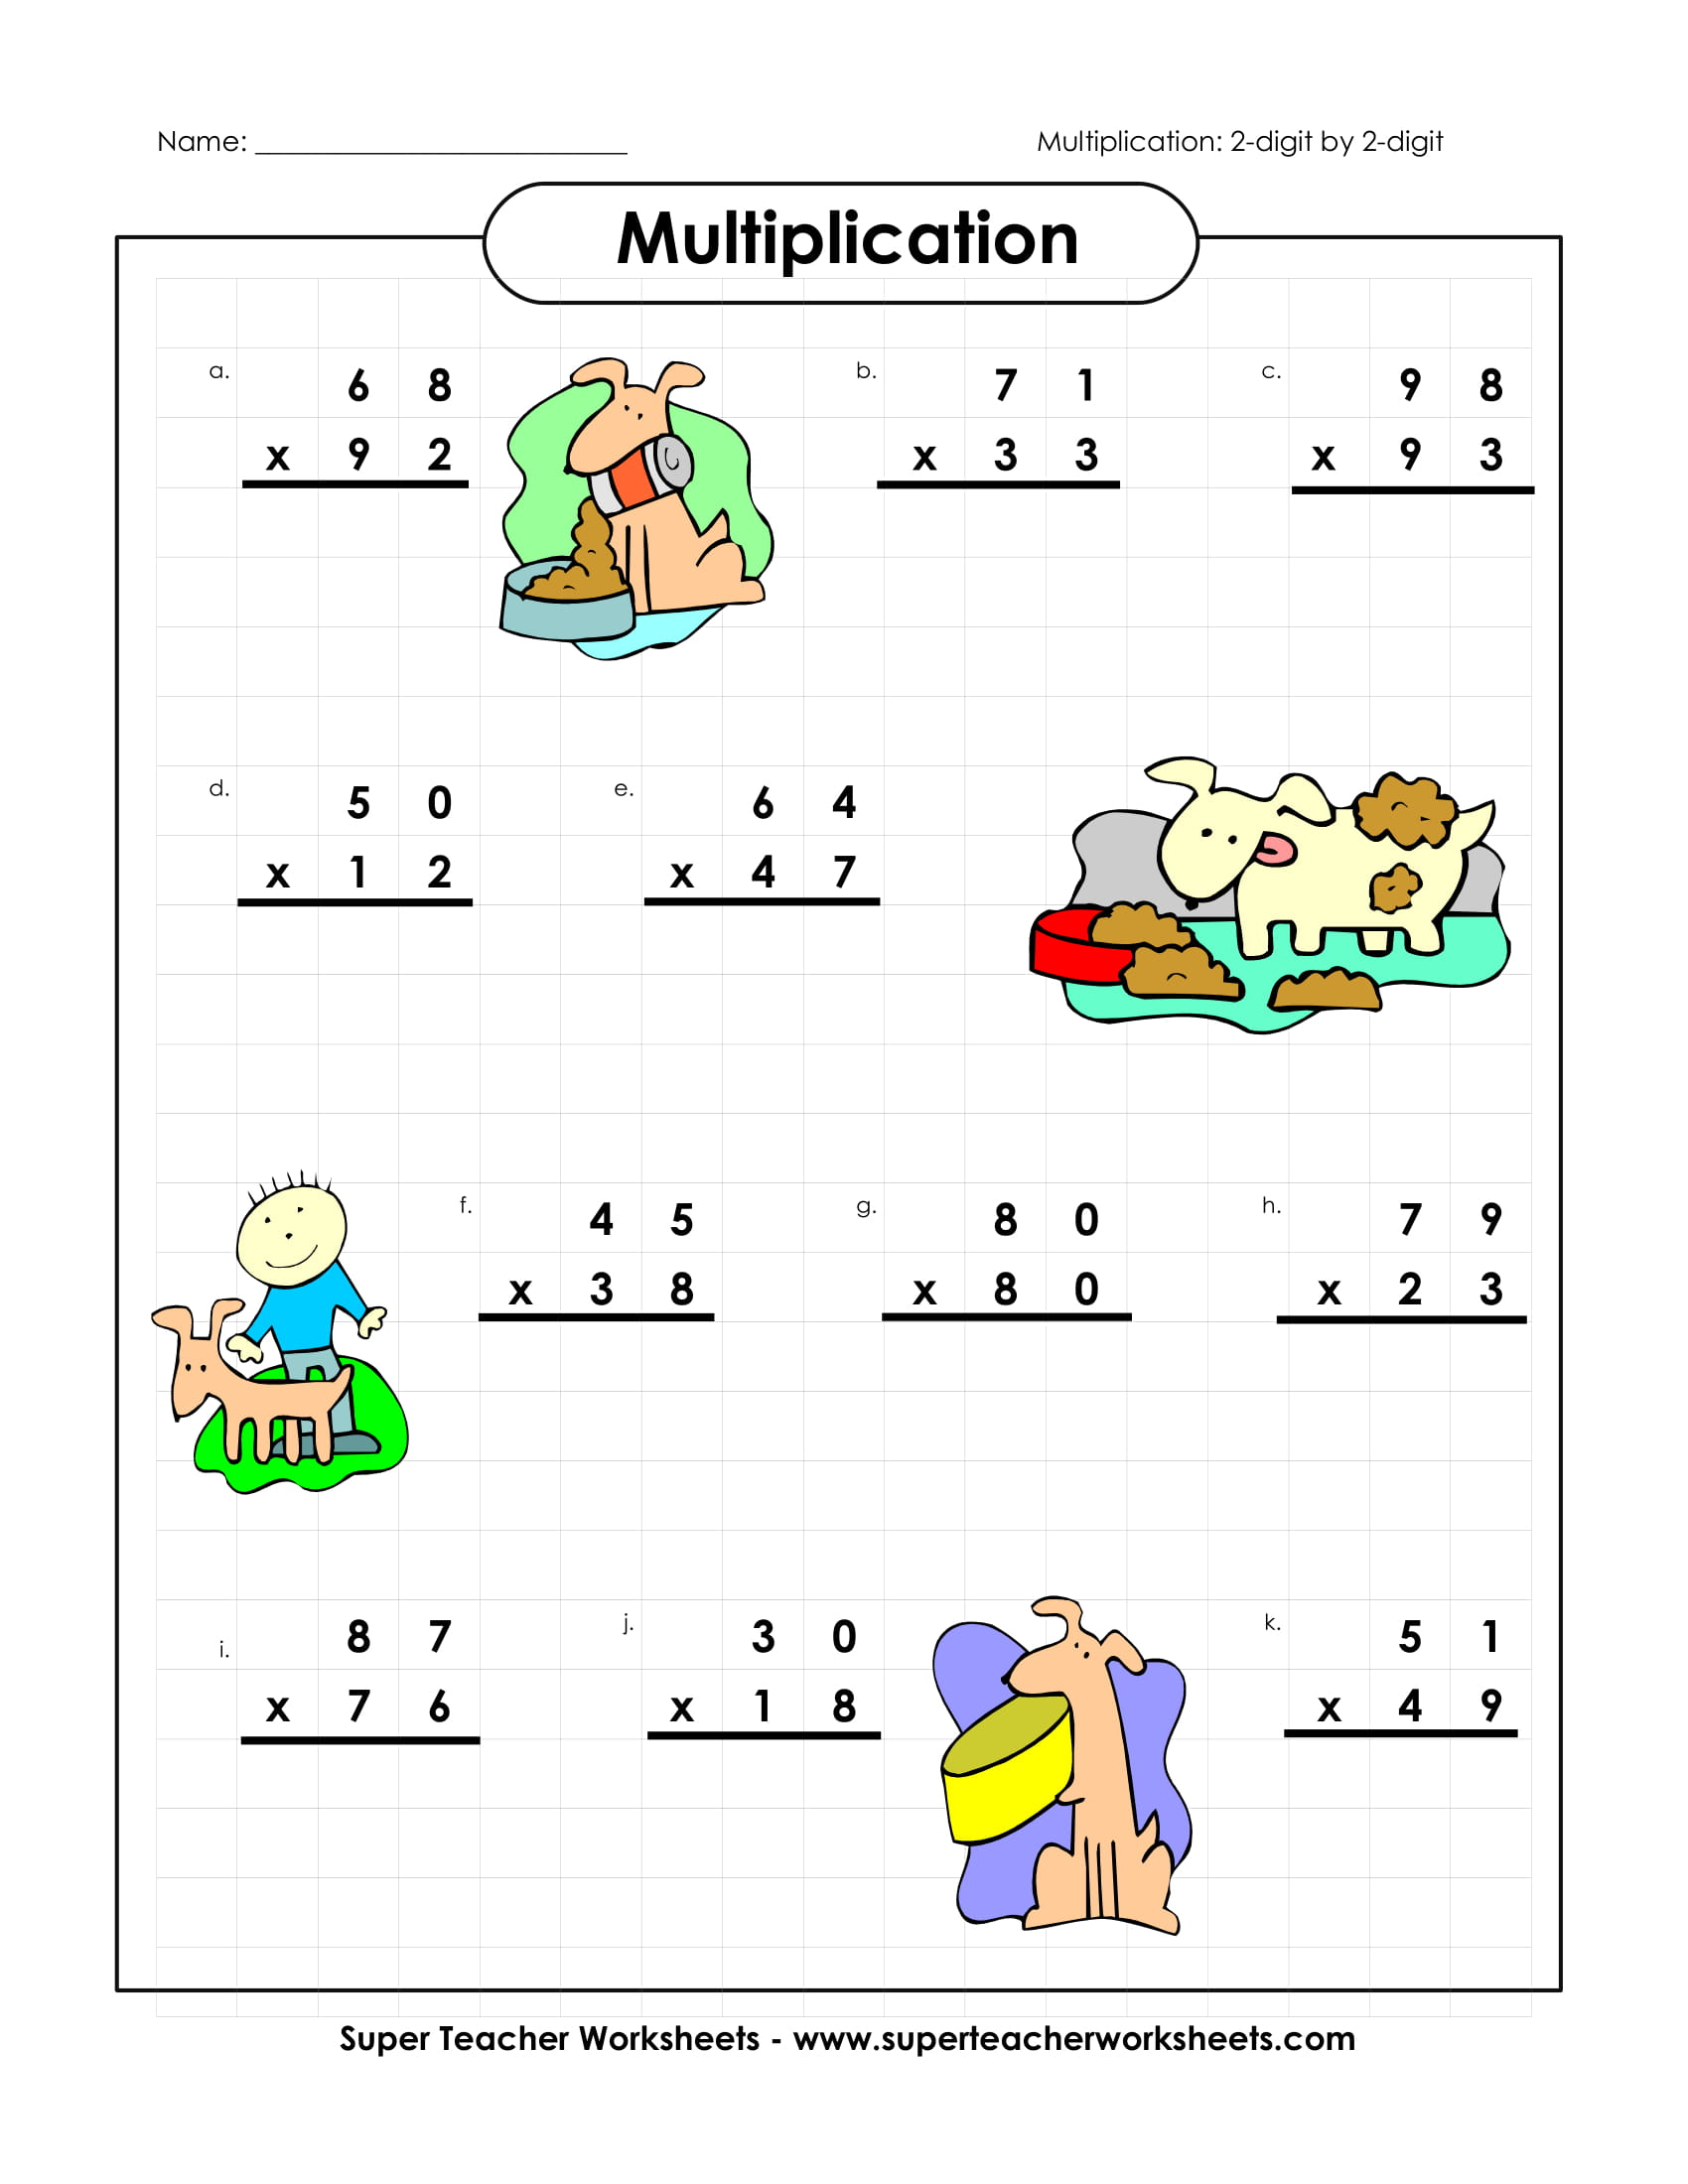 Multiplication Sample Worksheet